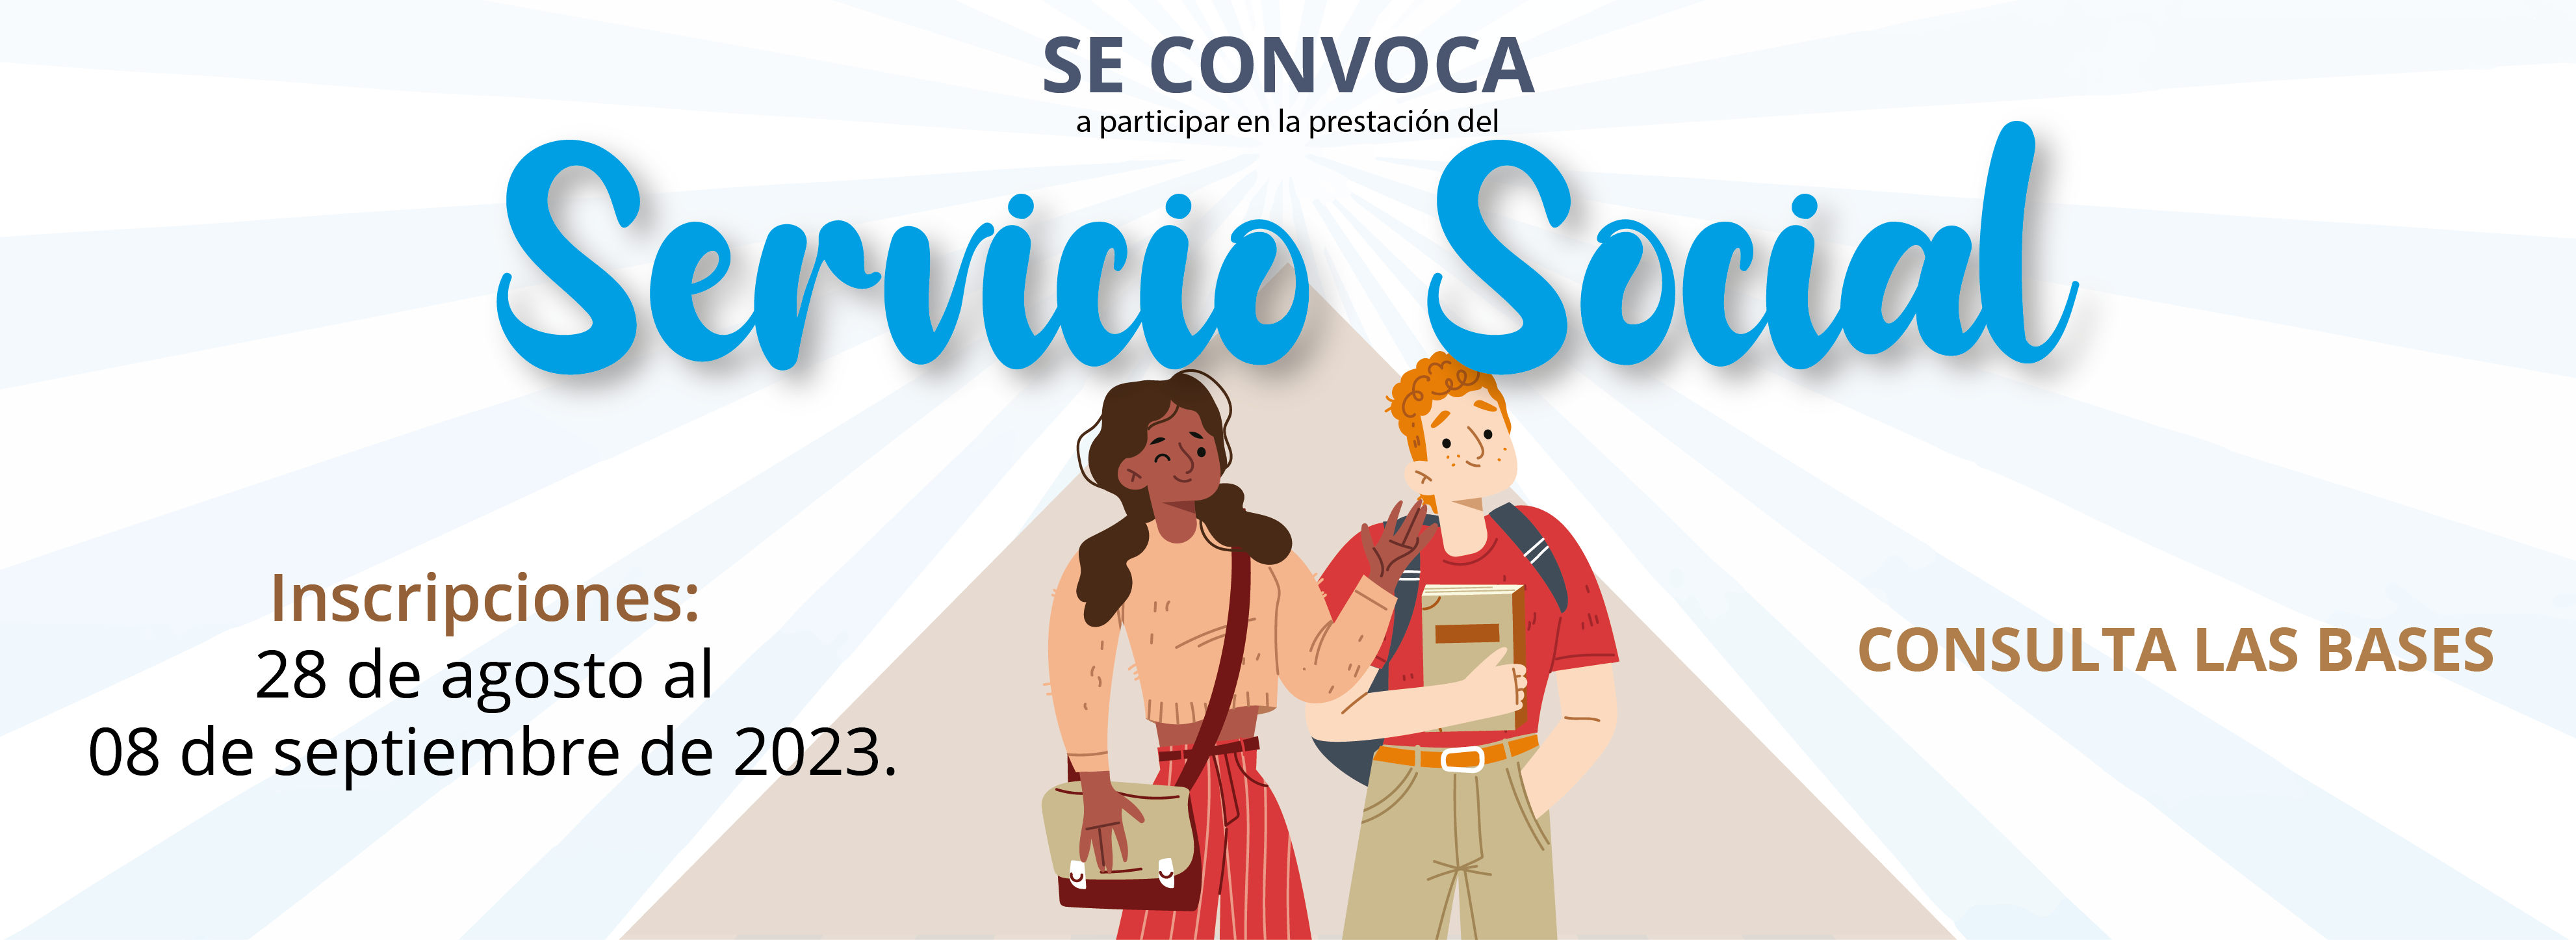 convocatoria_Servicio_Social_agosto_2023_banner_web